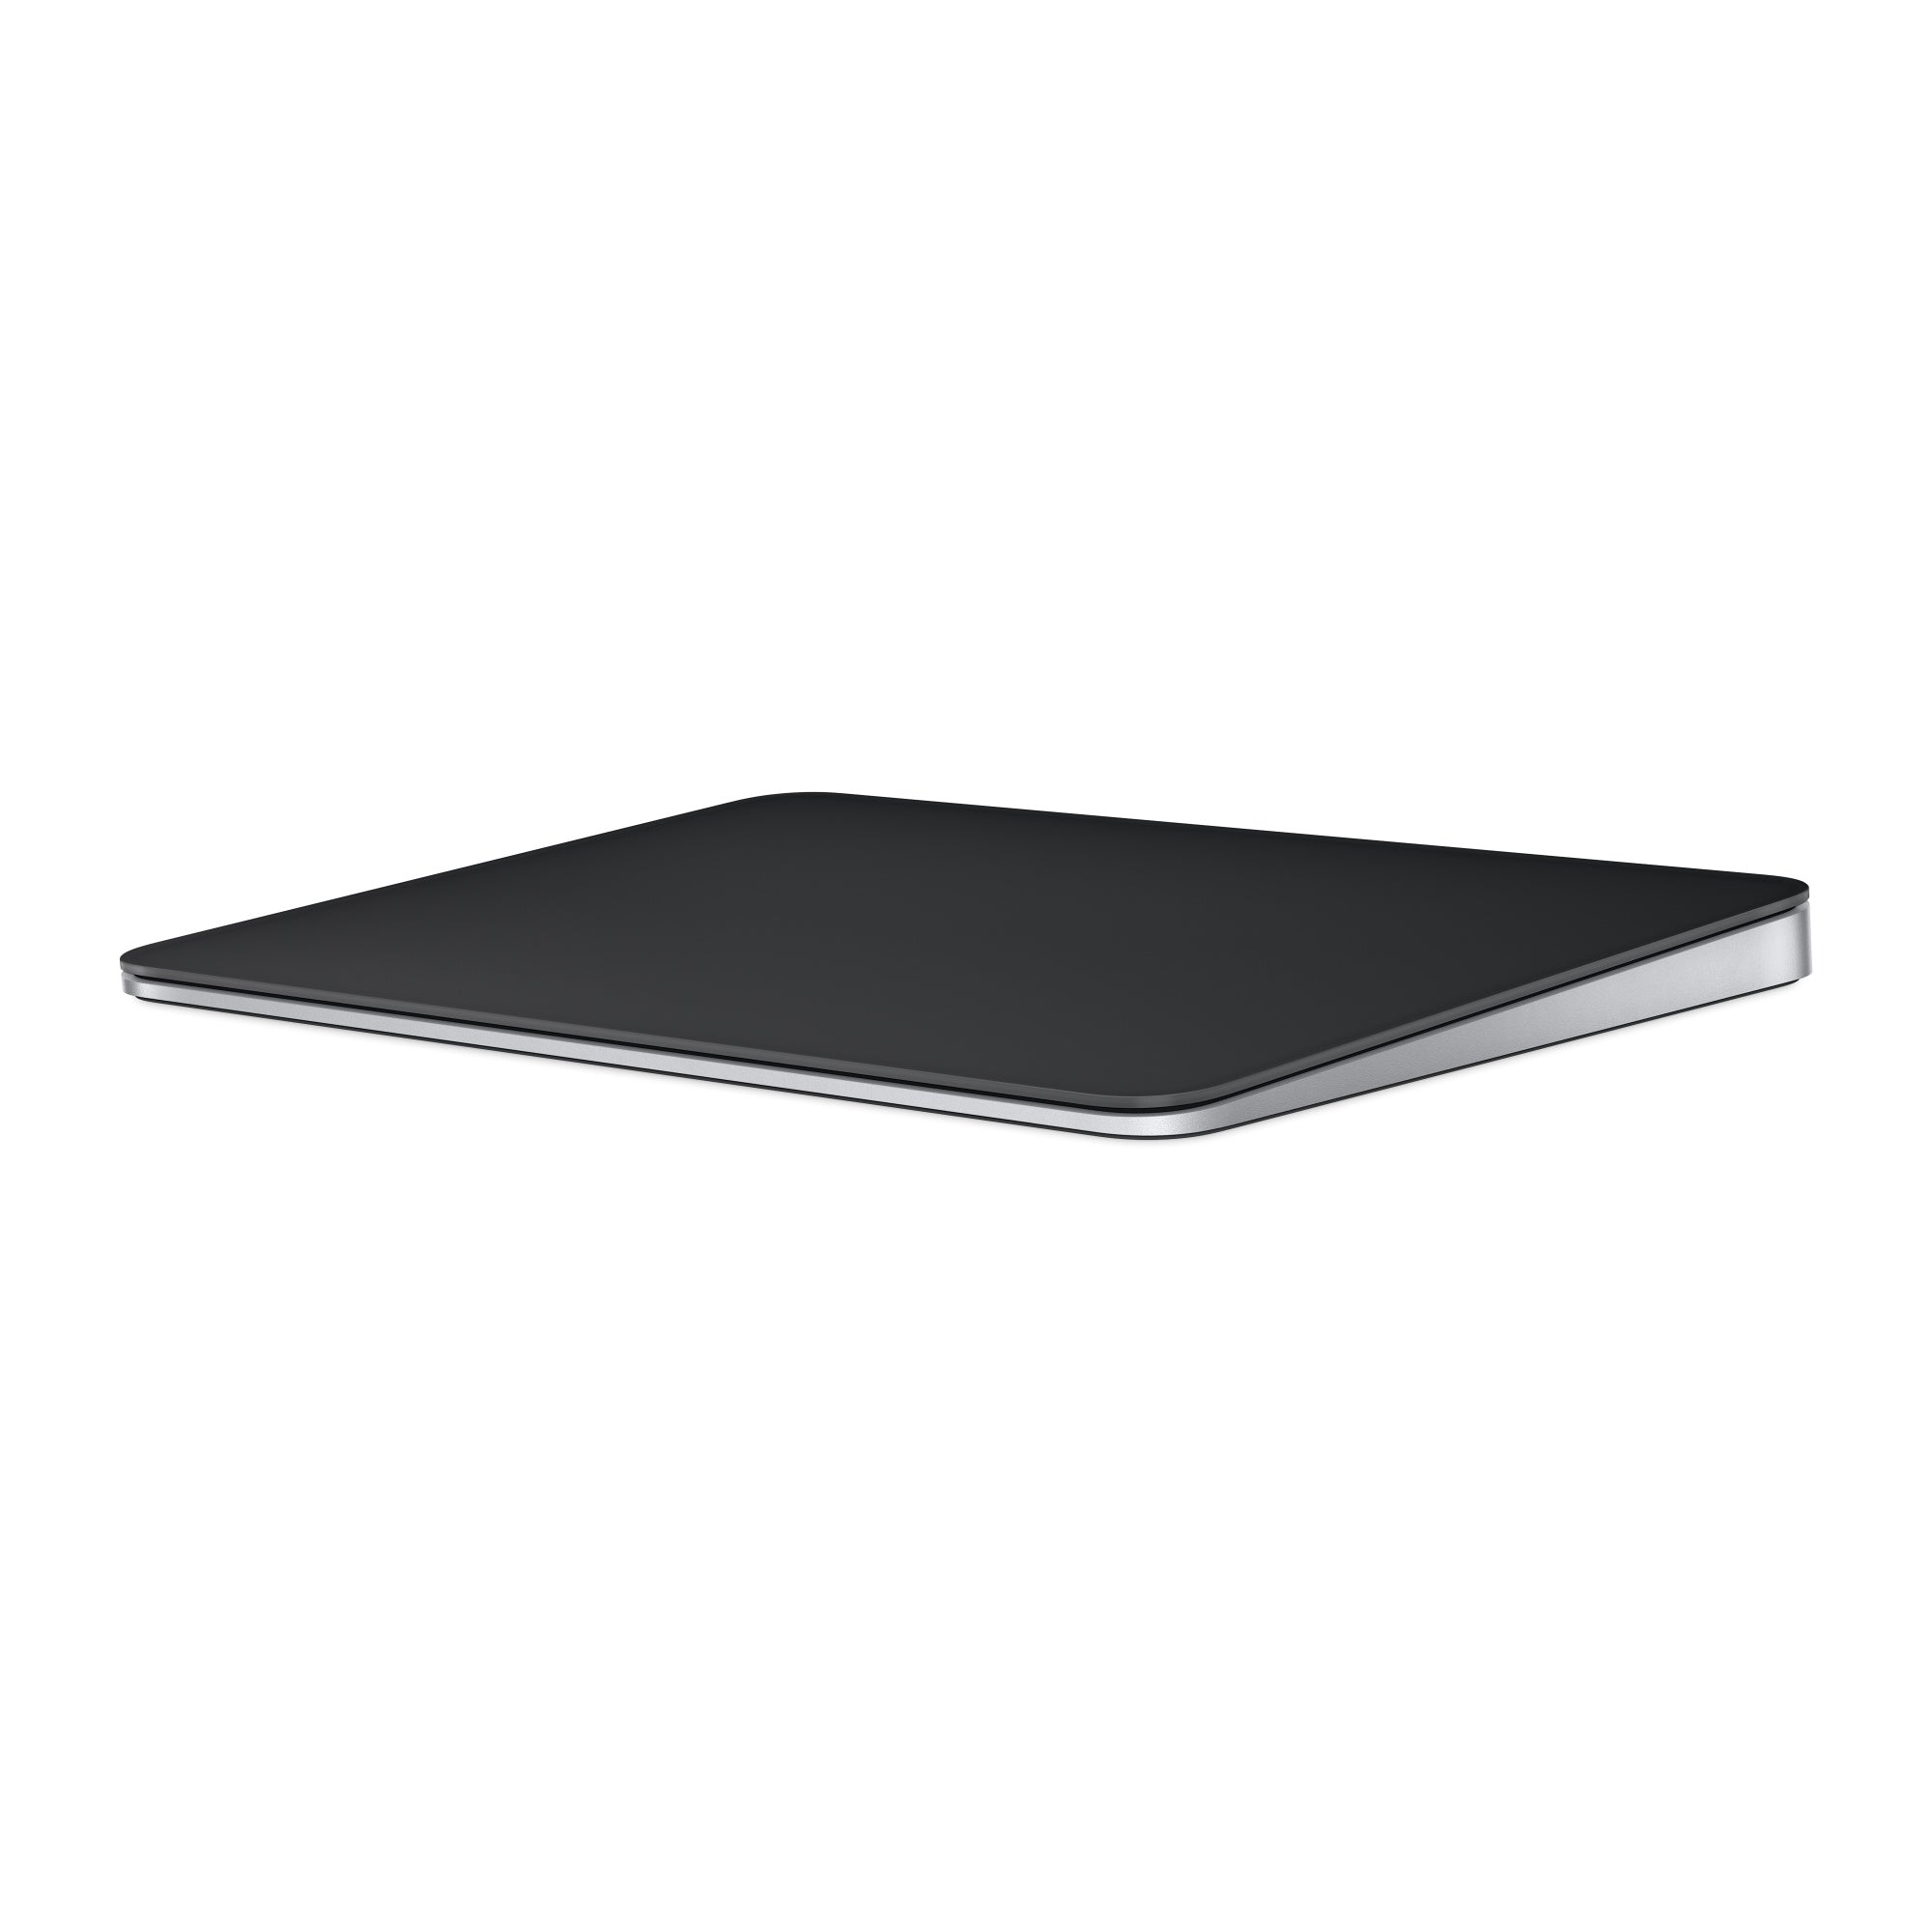 Apple Magic Trackpad 2 - New in Retail Box